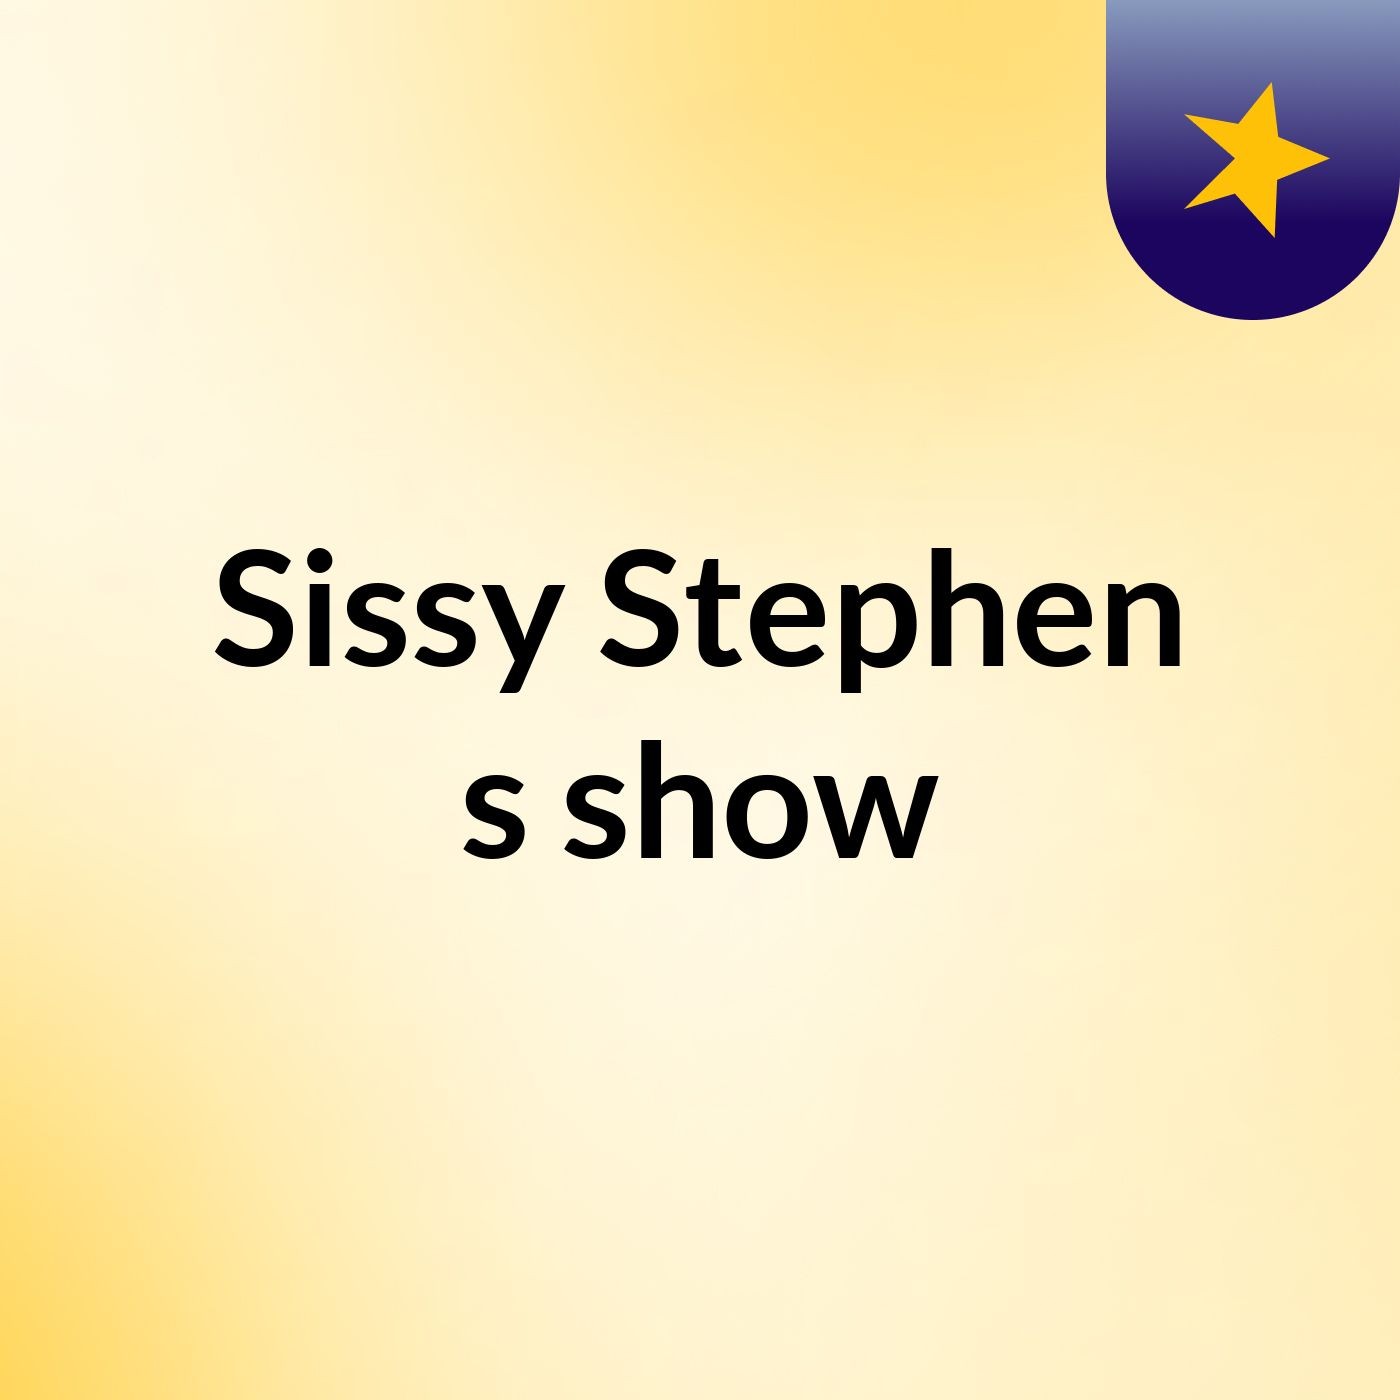 Sissy Stephen's show